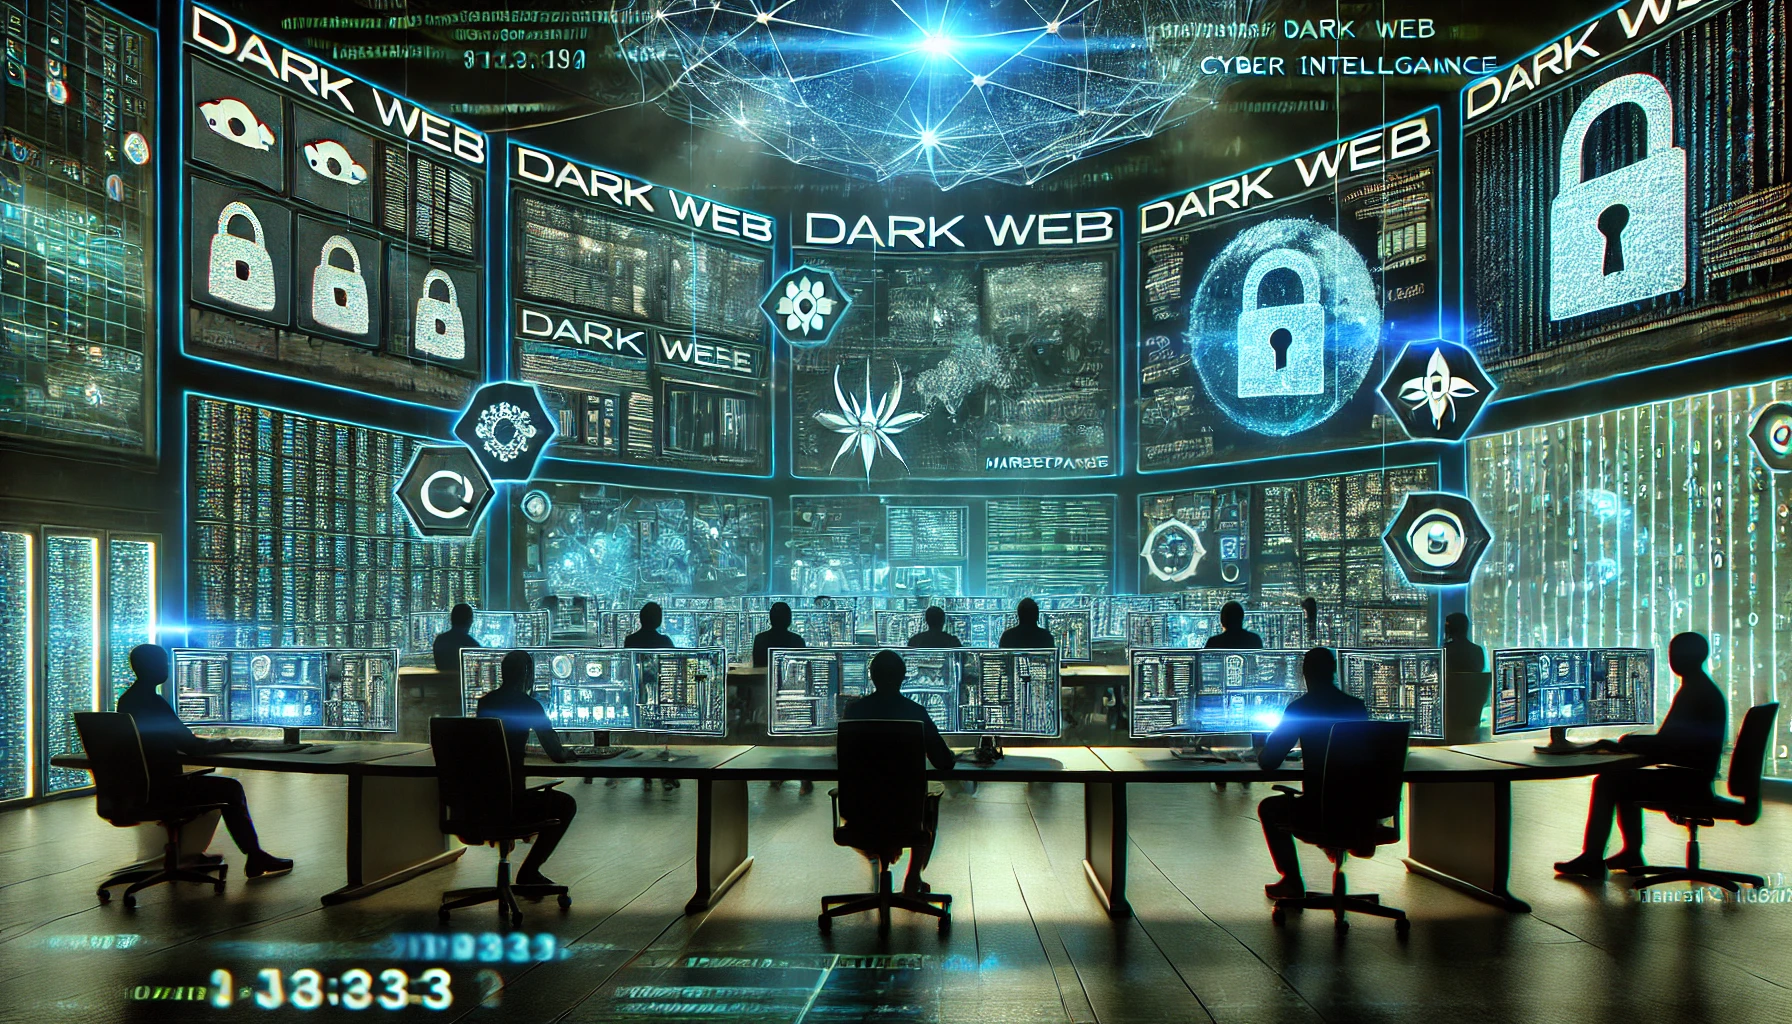 Dark Web Cyber Intelligence Monitoring